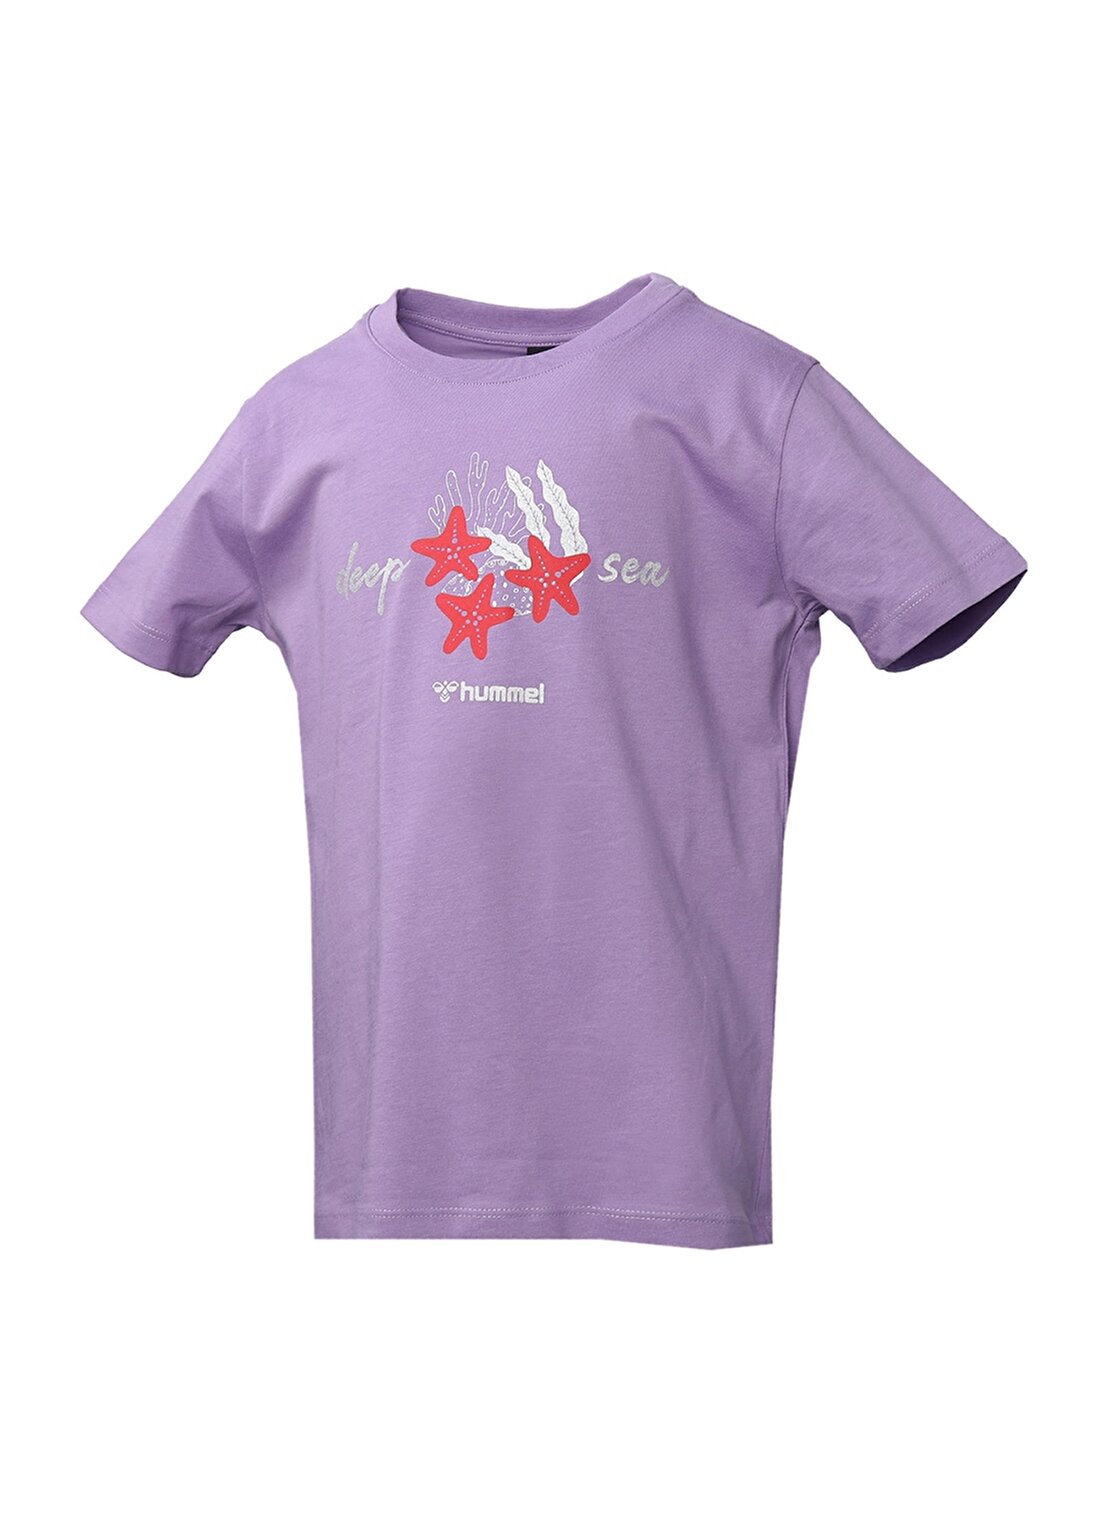 Hummel ASTERIODA T-SHIRT S/S Mor Kız Çocuk T-Shirt 911470-2102